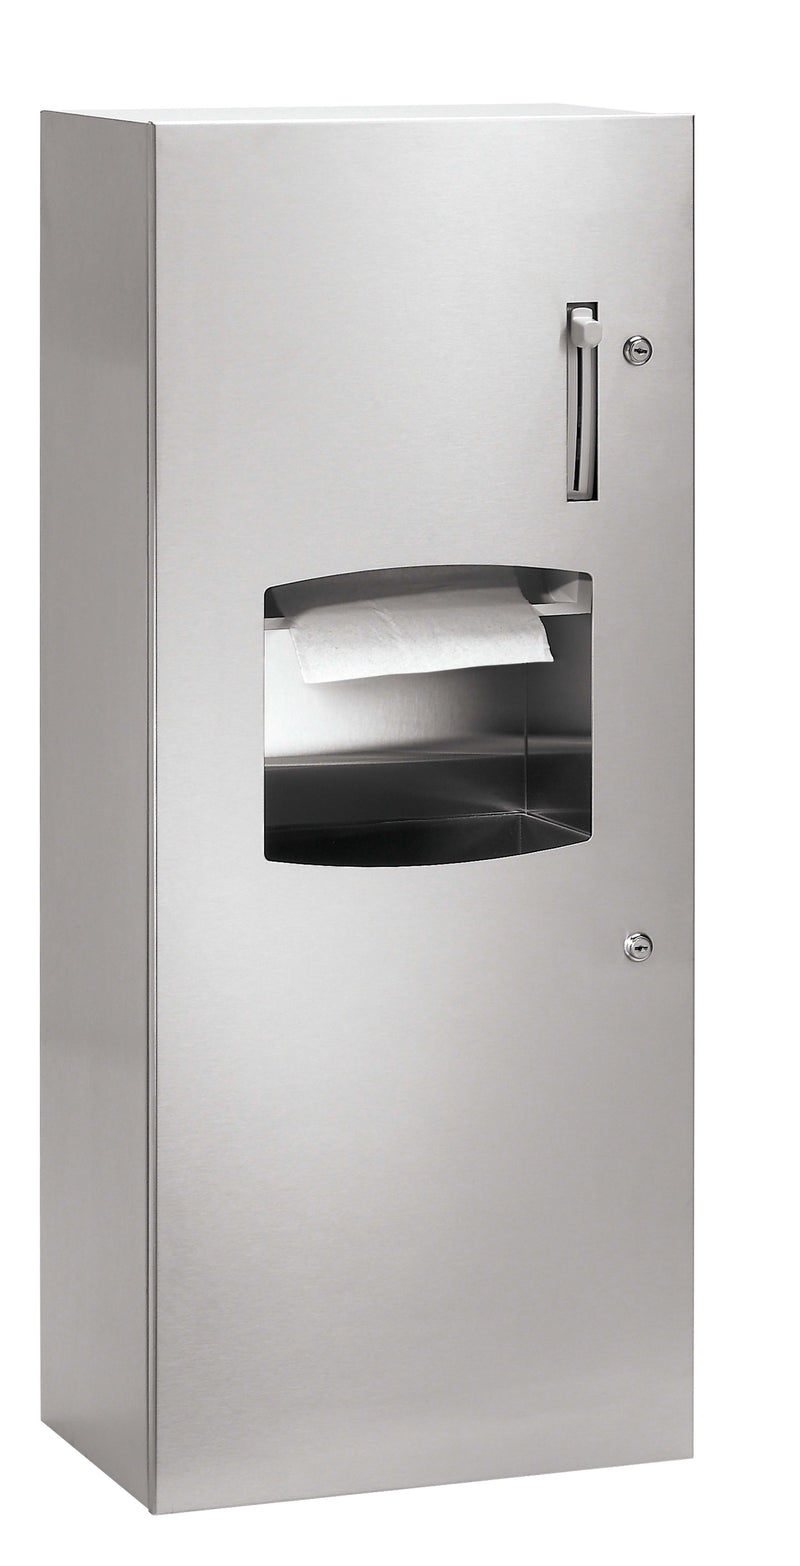 Bradley 2277-11 Surface-Mount Paper Towel Dispenser & Waste Receptacle